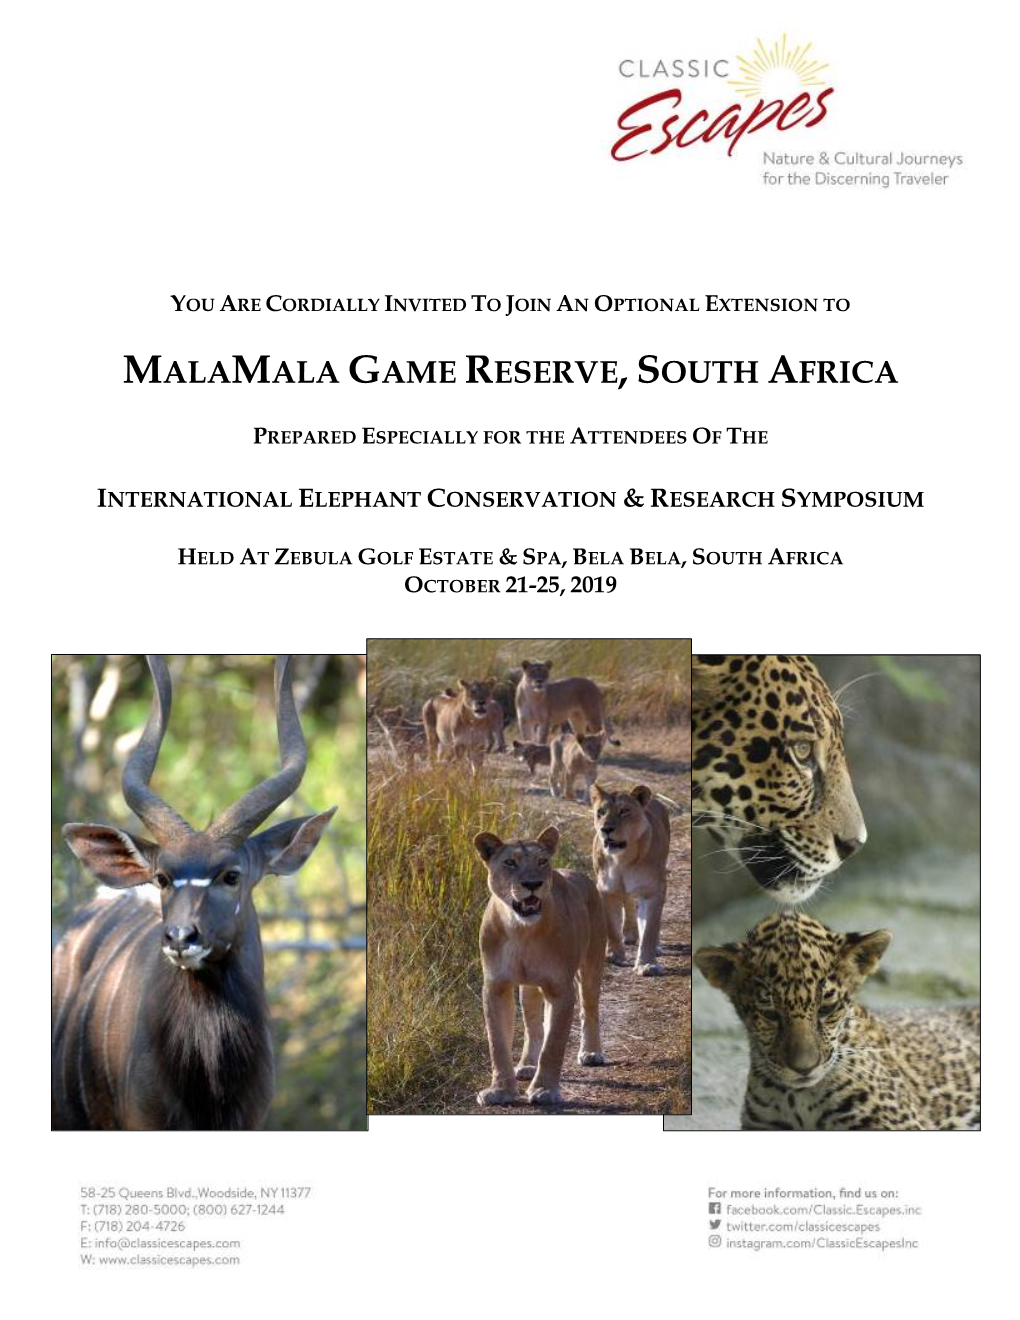 Malamala Game Reserve, South Africa